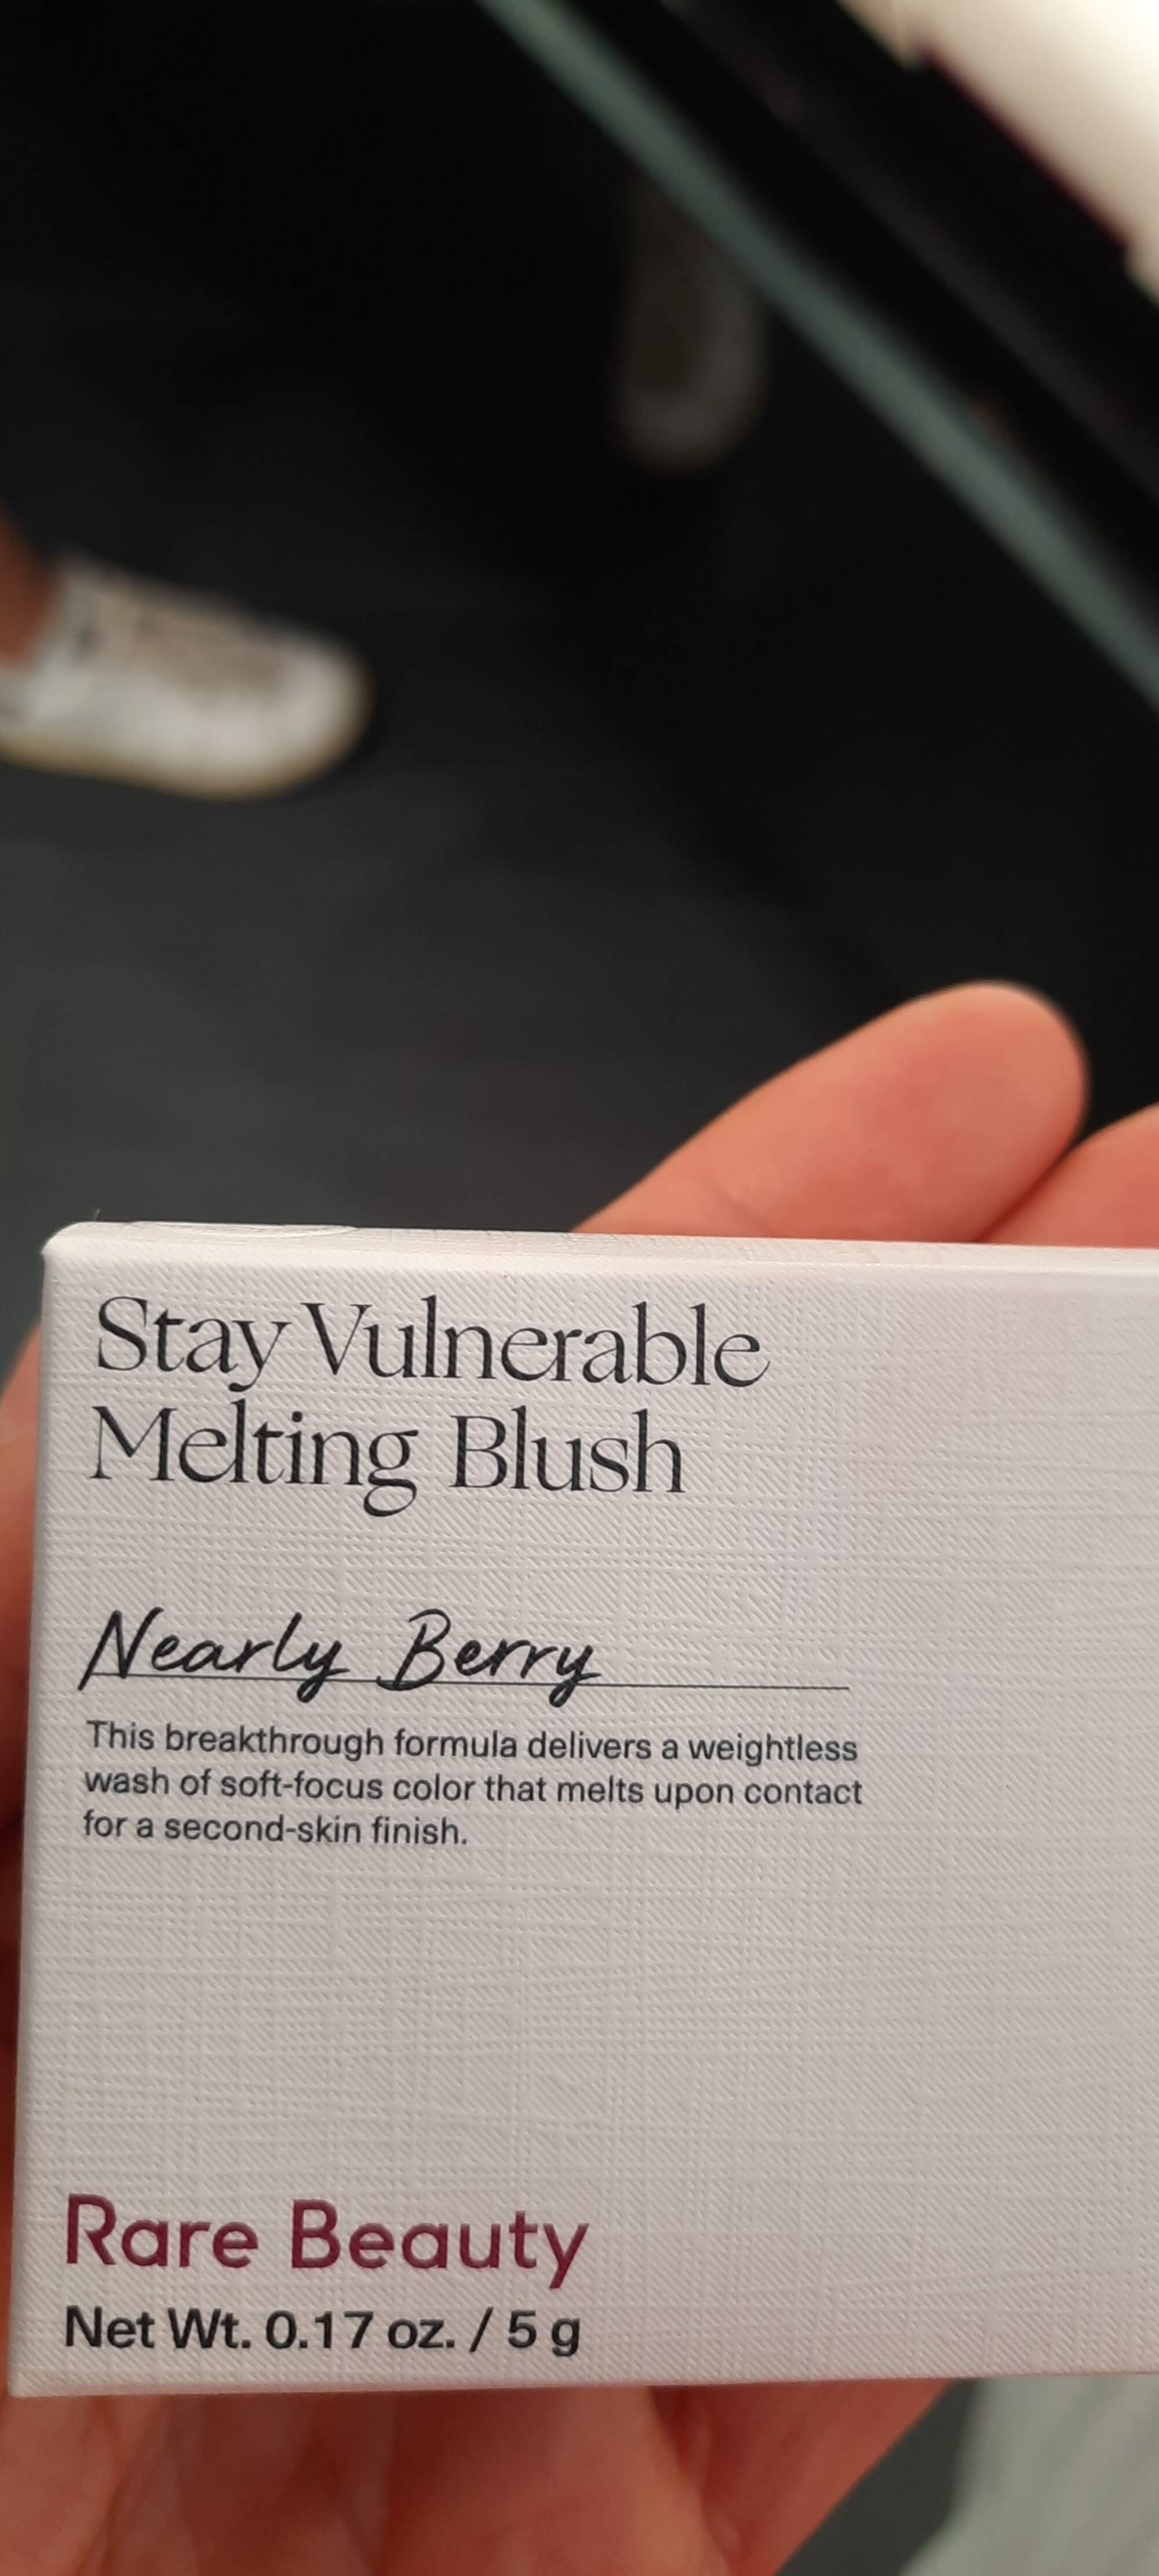 RARE BEAUTY - Stay vulnerable melting blush